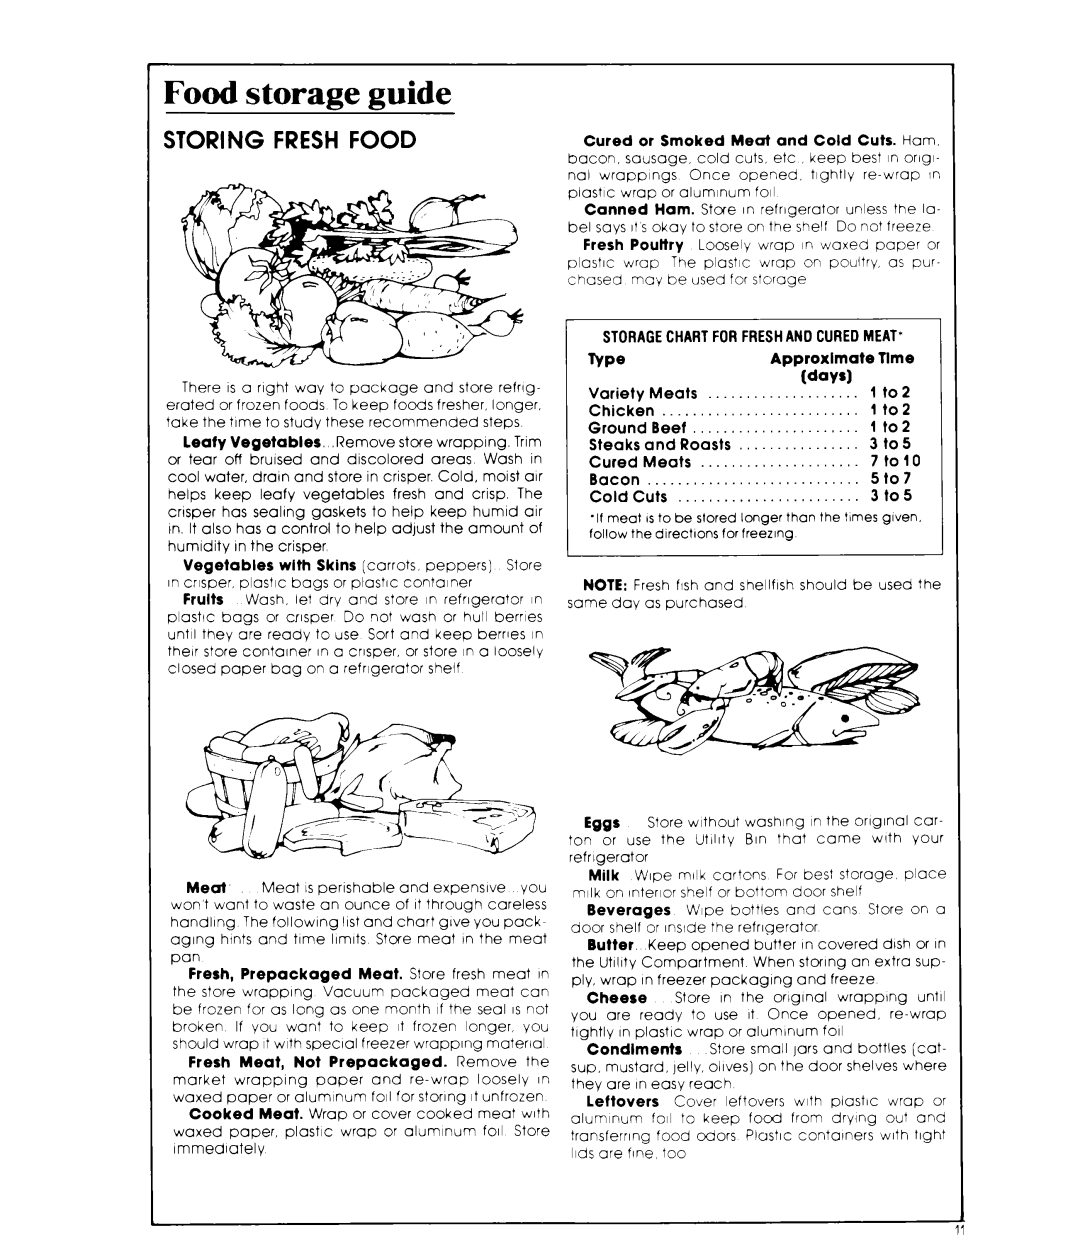 Whirlpool ED22MM manual Food storage guide, Storing Fresh Food 